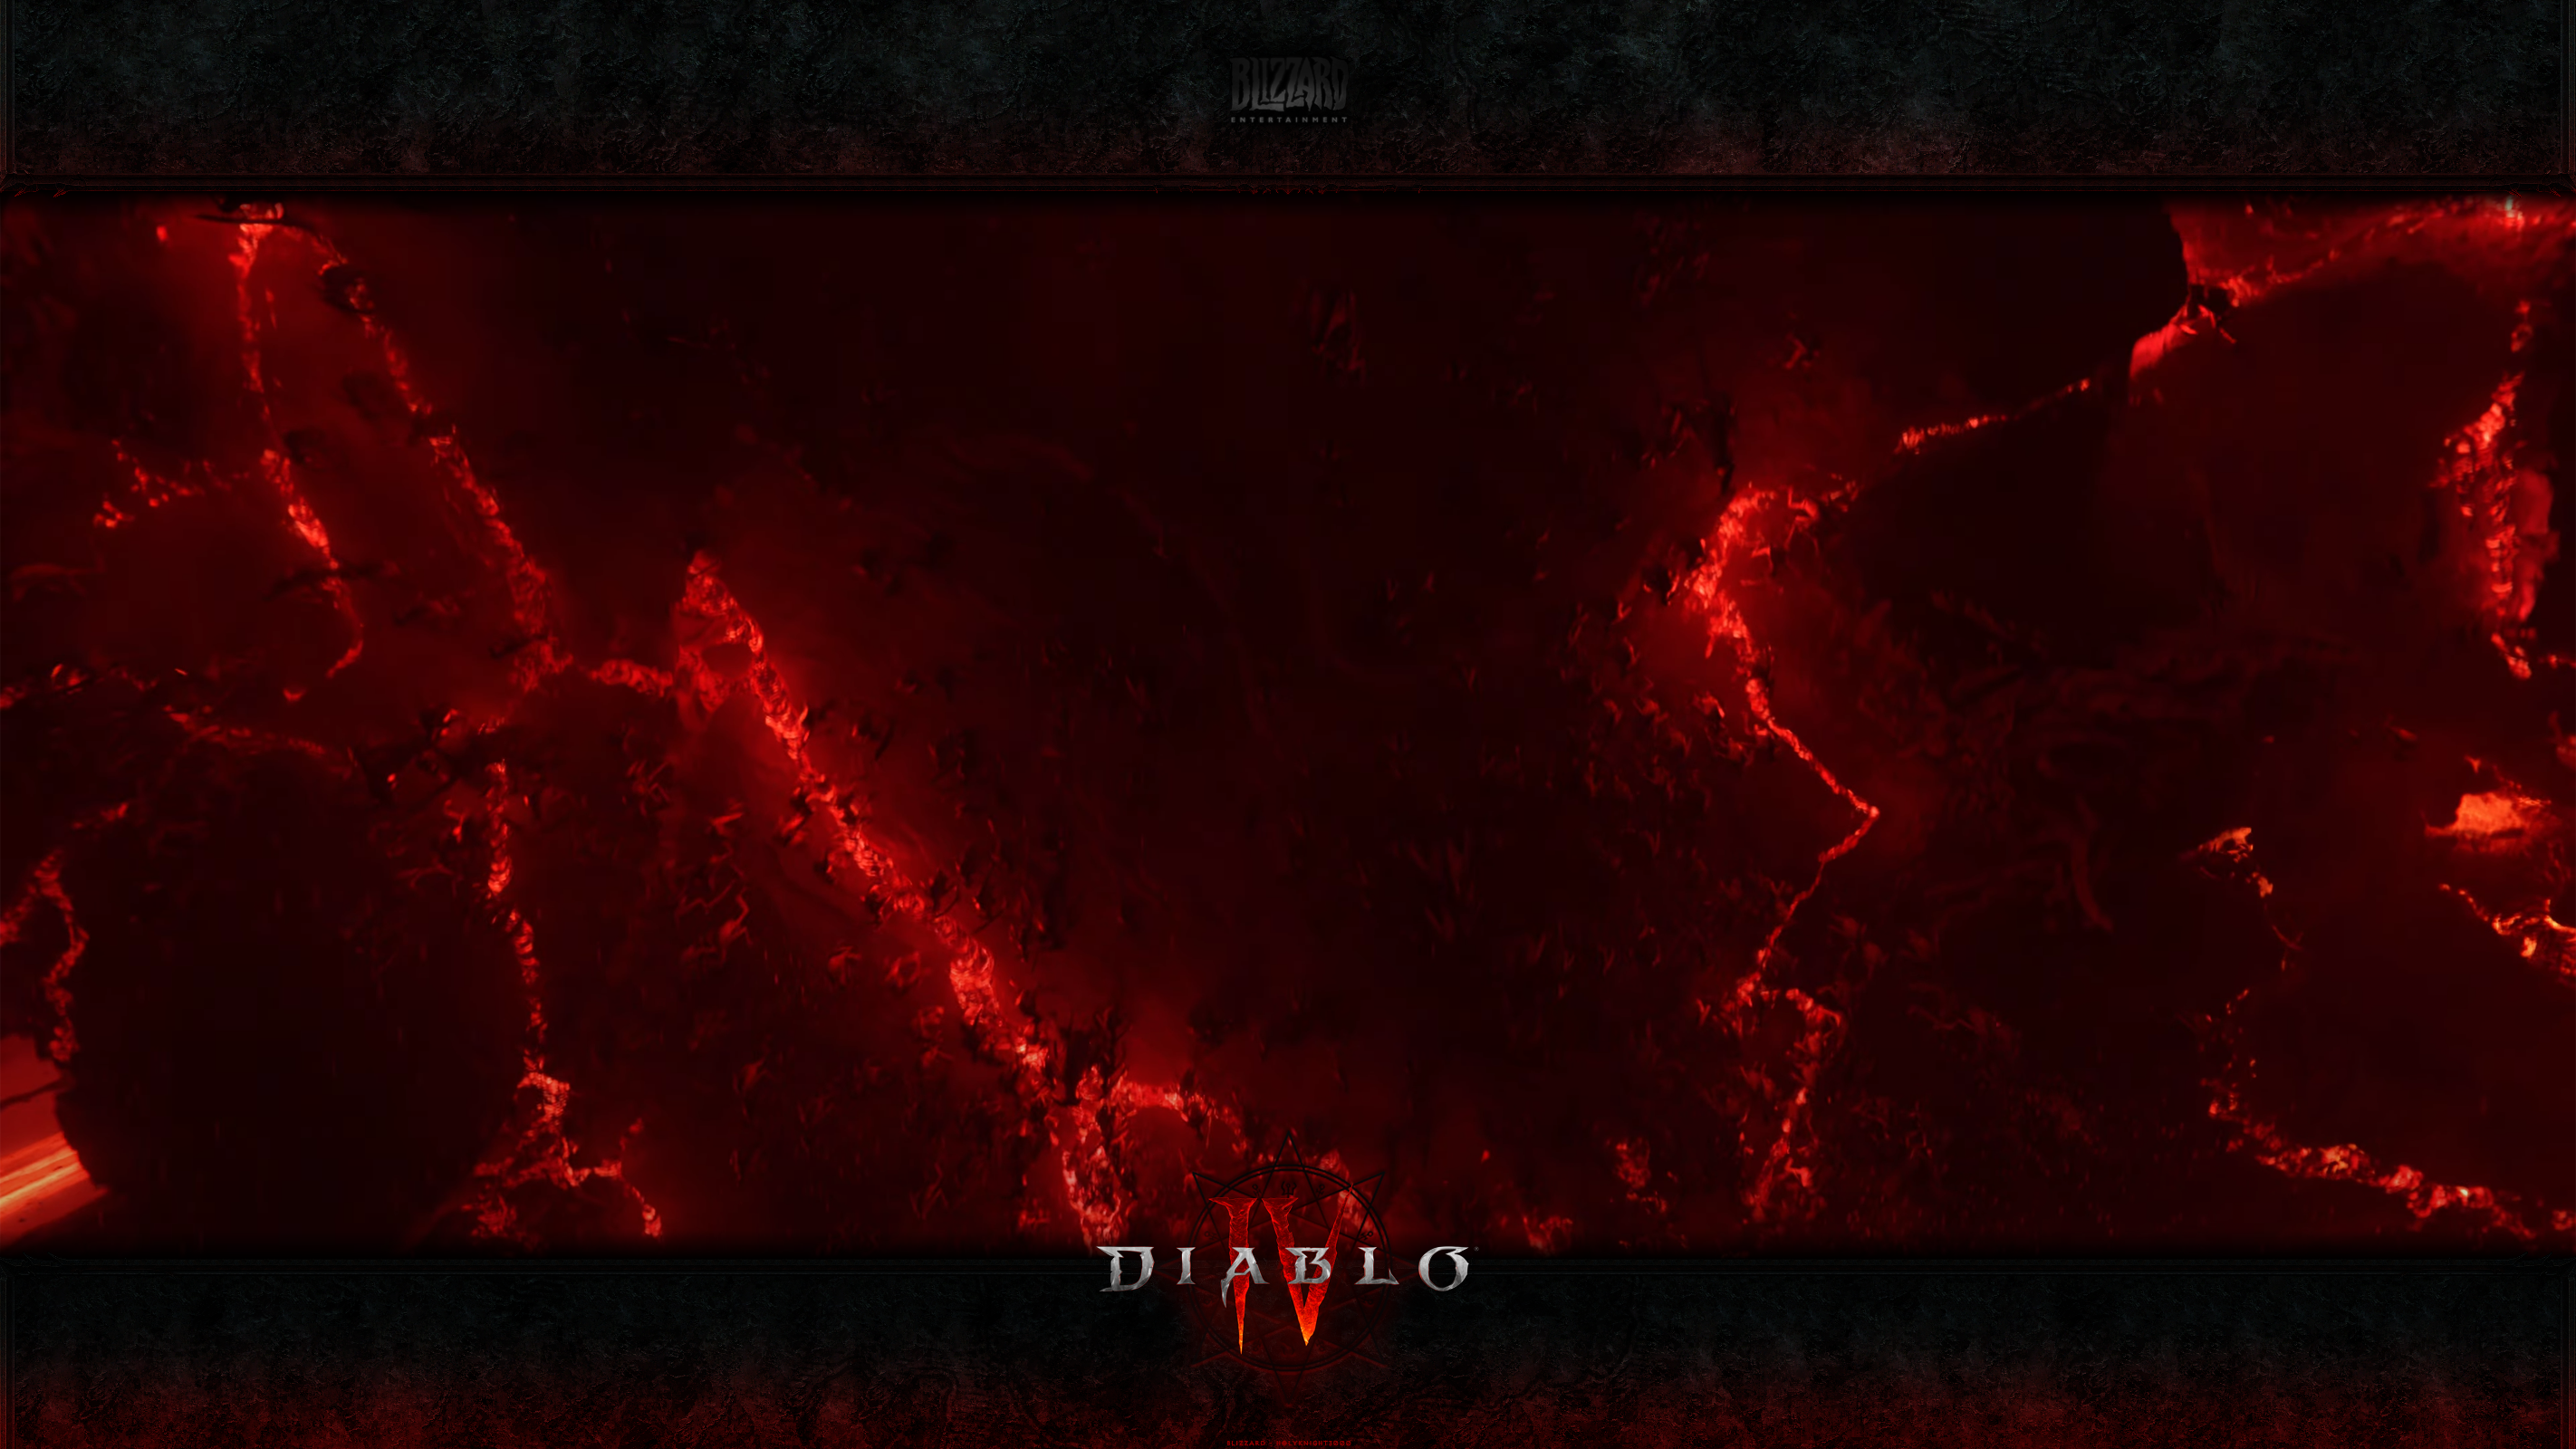 Diablo IV: The Release Date Trailer #25